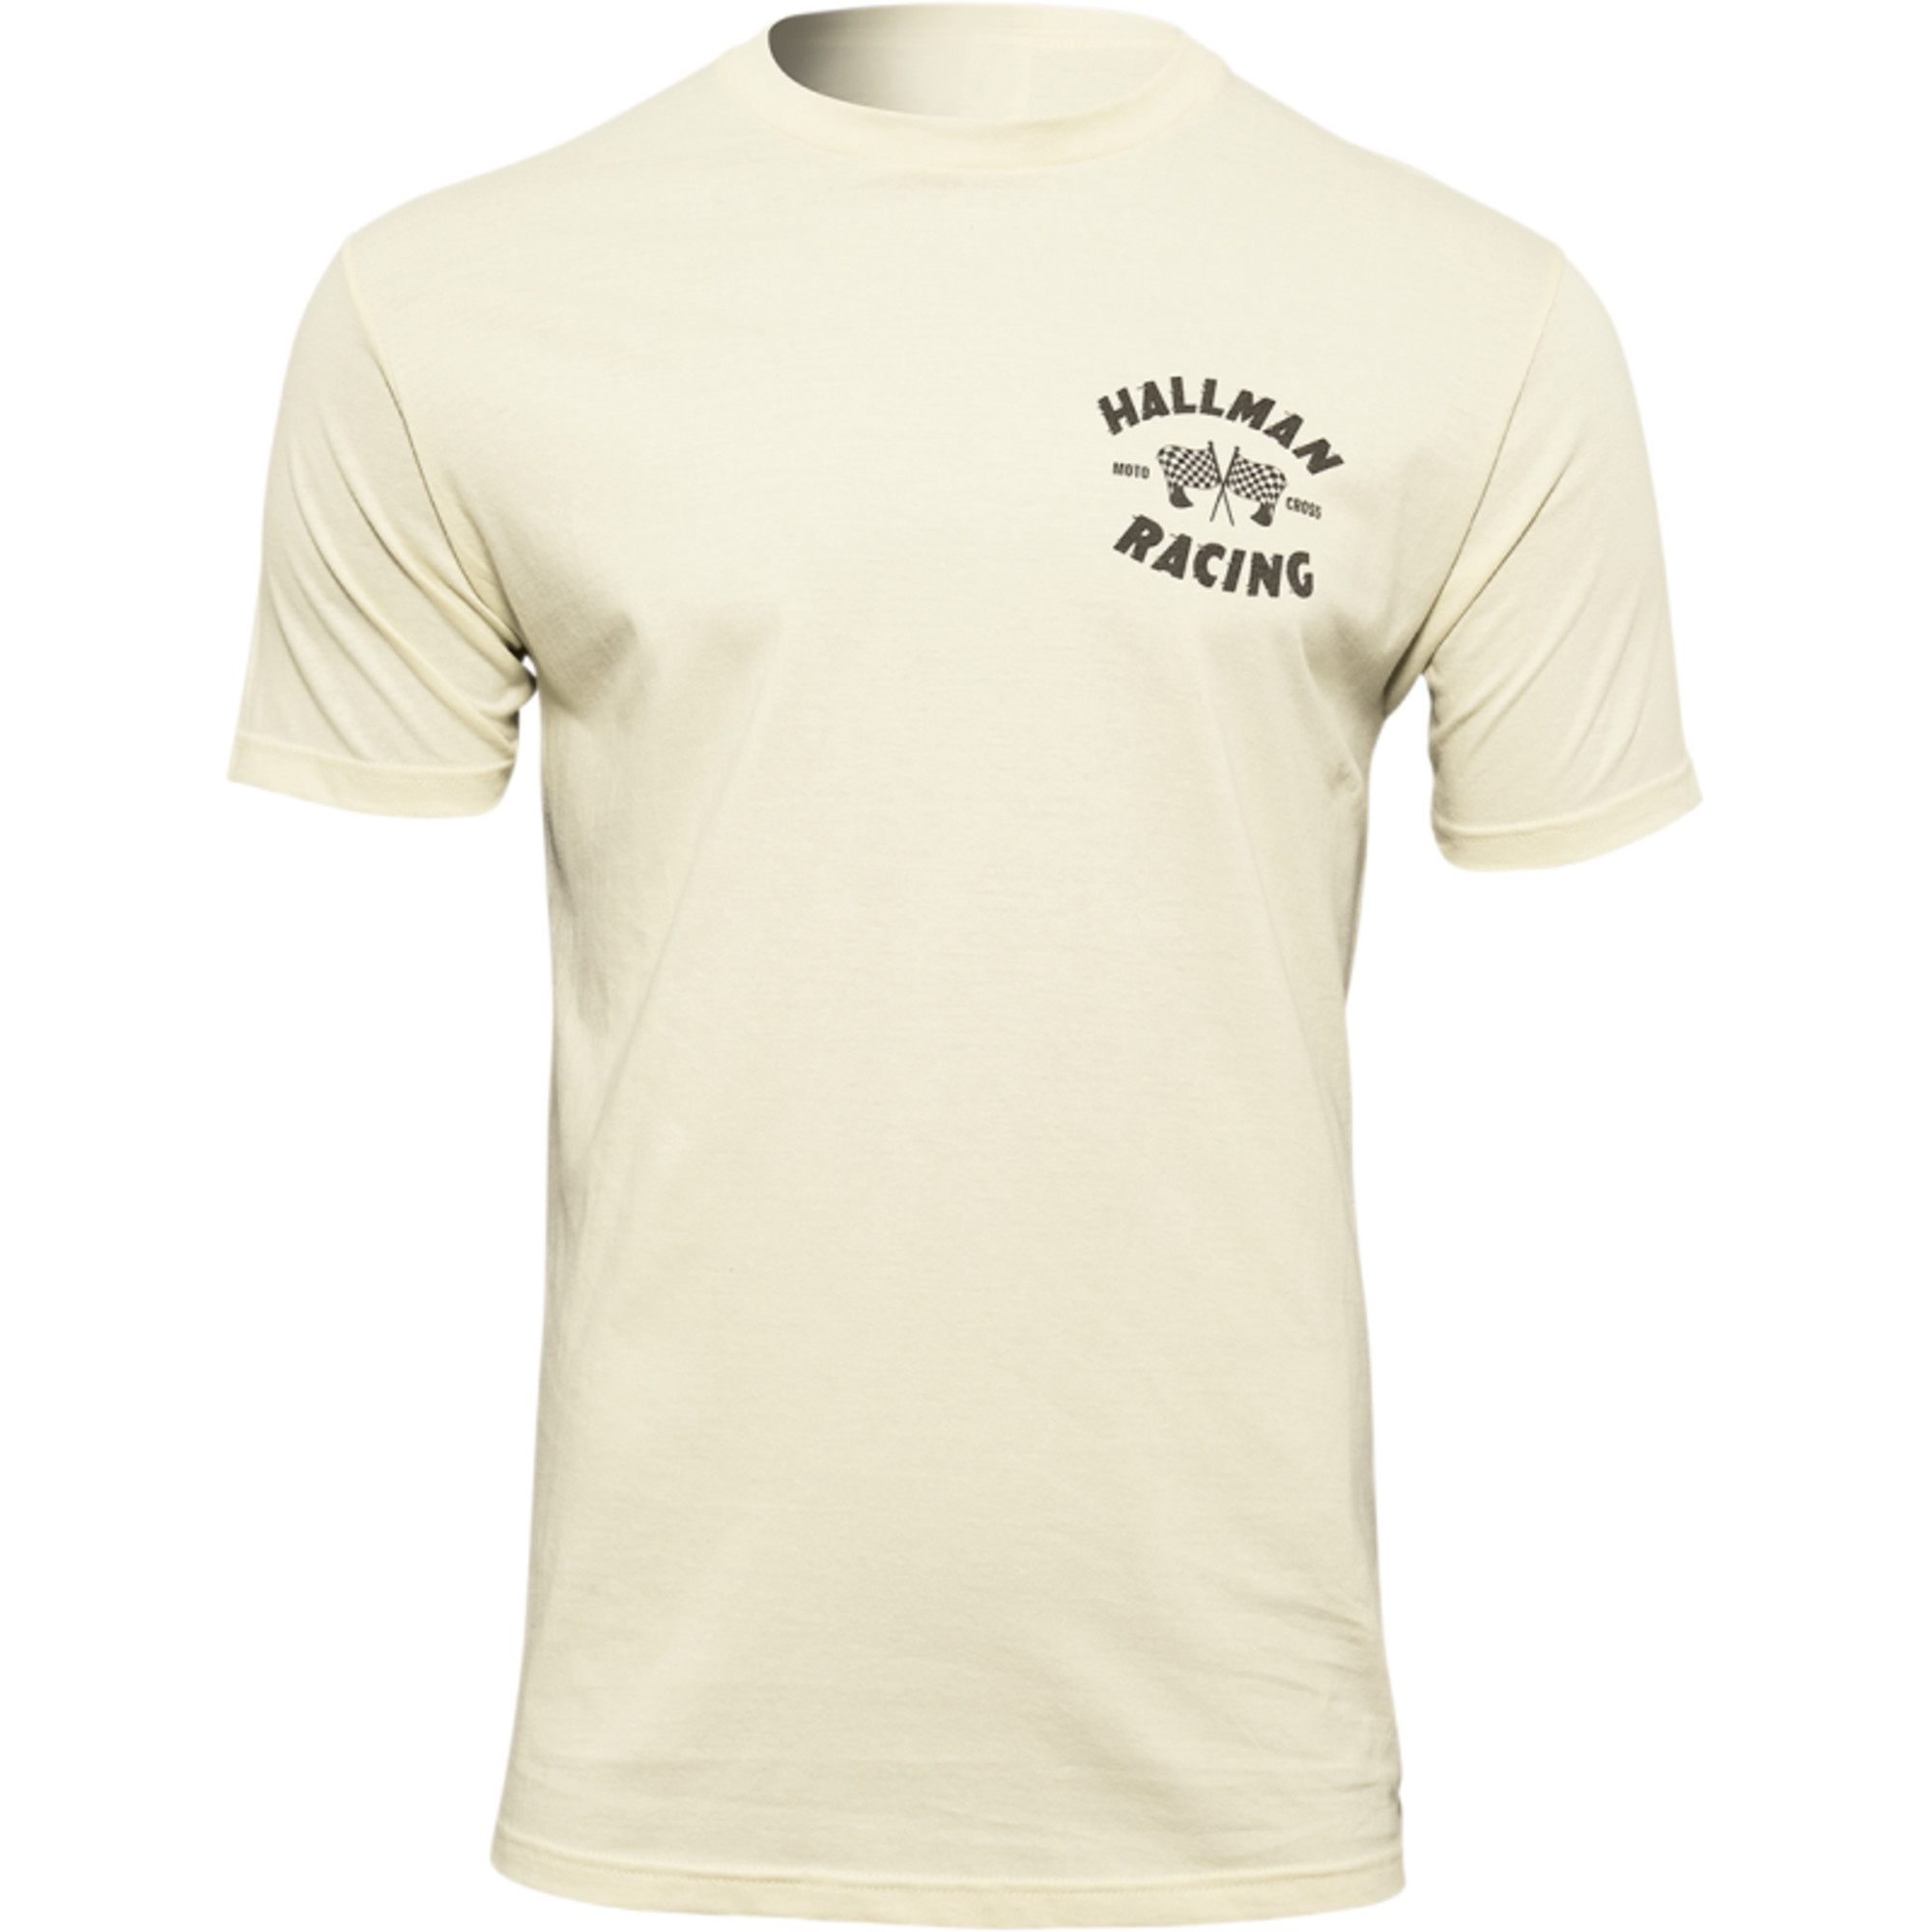 thor t-shirt shirts for men hallman champ